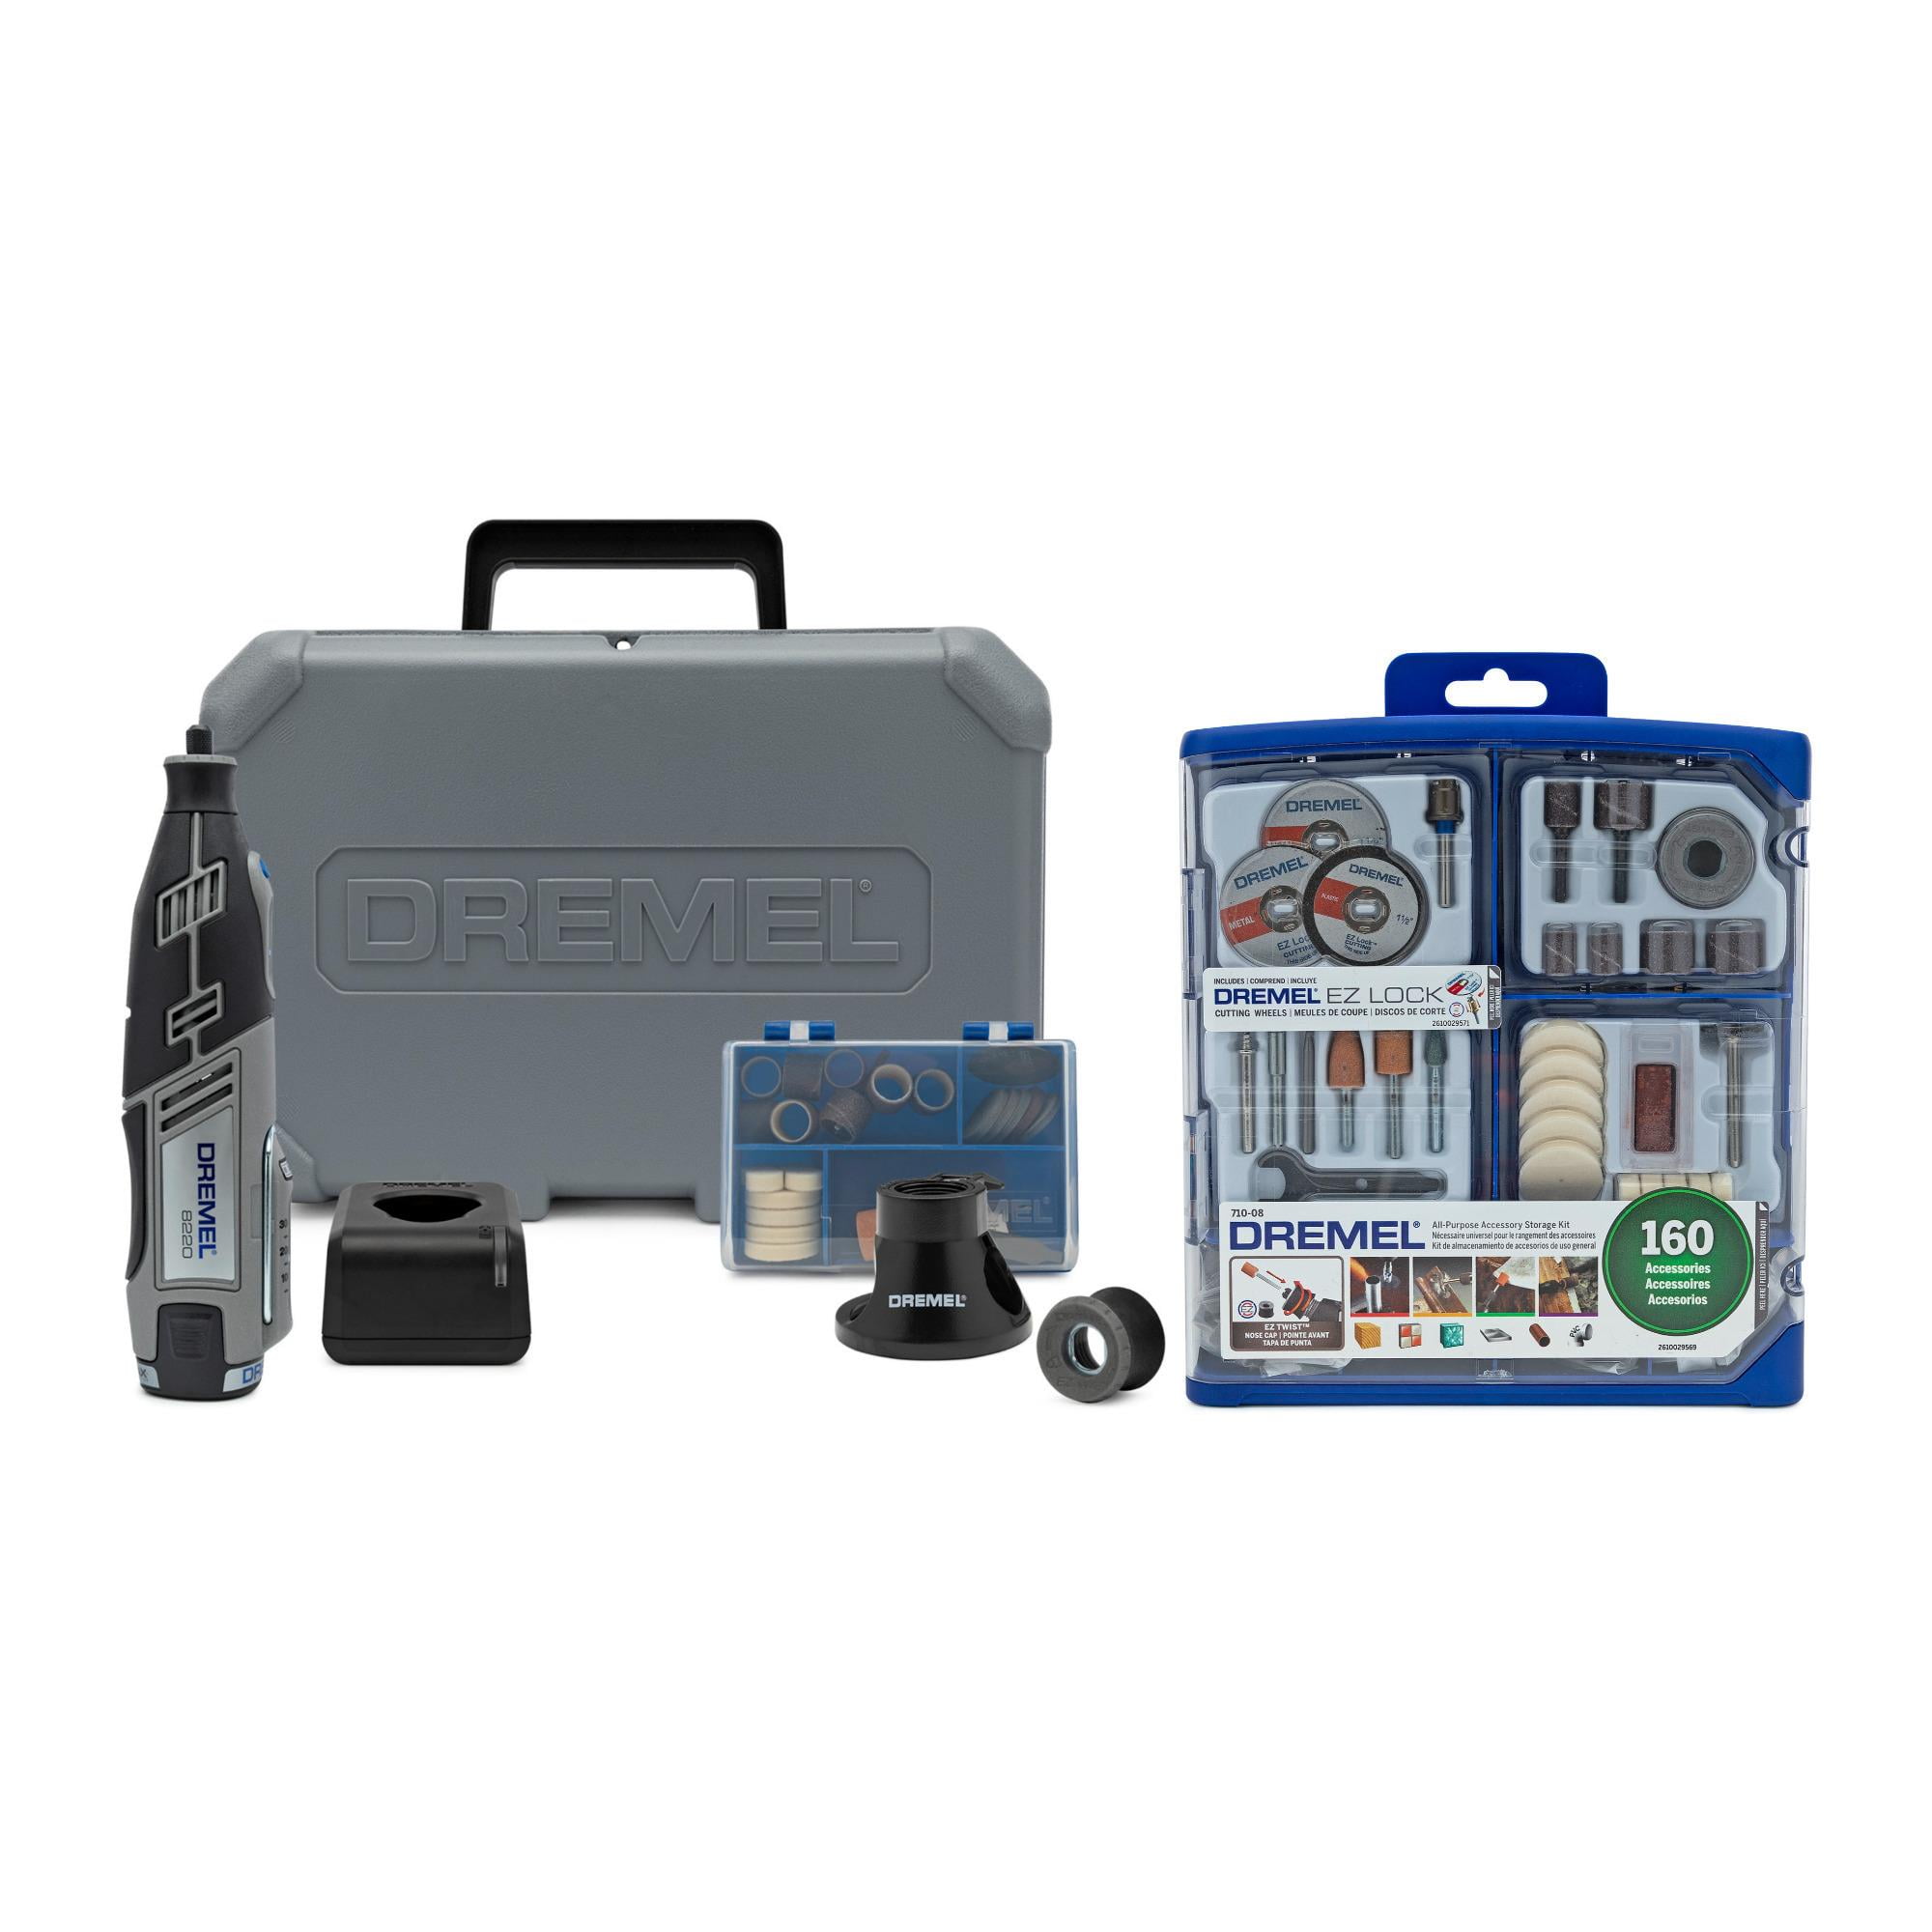 Dremel 8220 12V Max Lithium-Ion Cordless Rotary Tool Kit